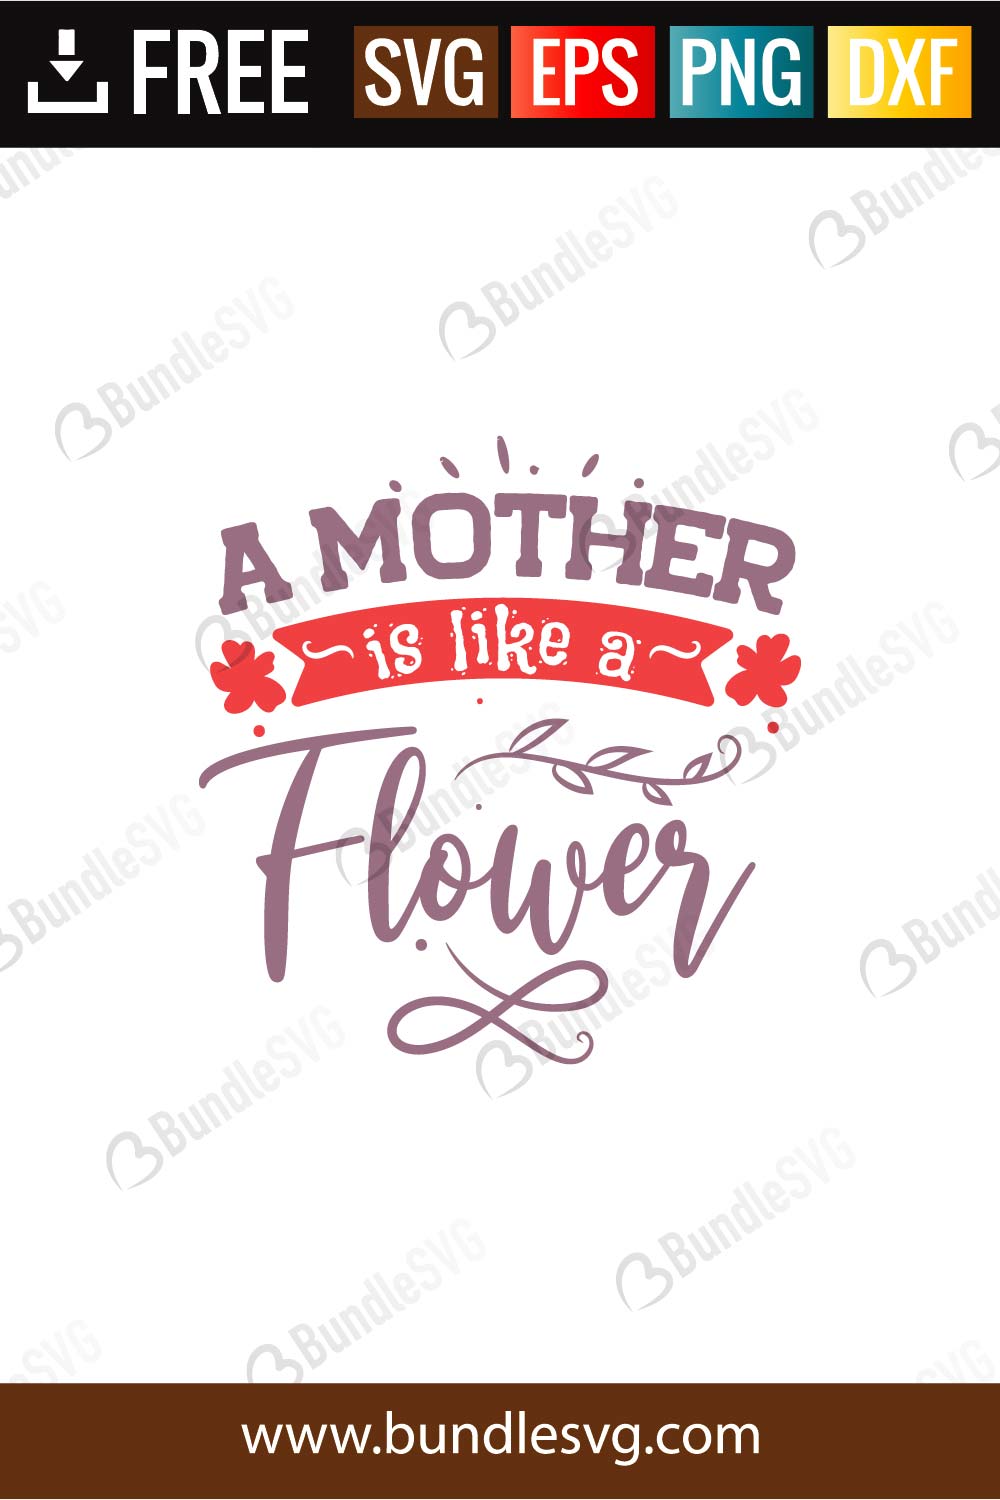 Download A Mother Is Like A Flower Svg Cut Files Bundlesvg